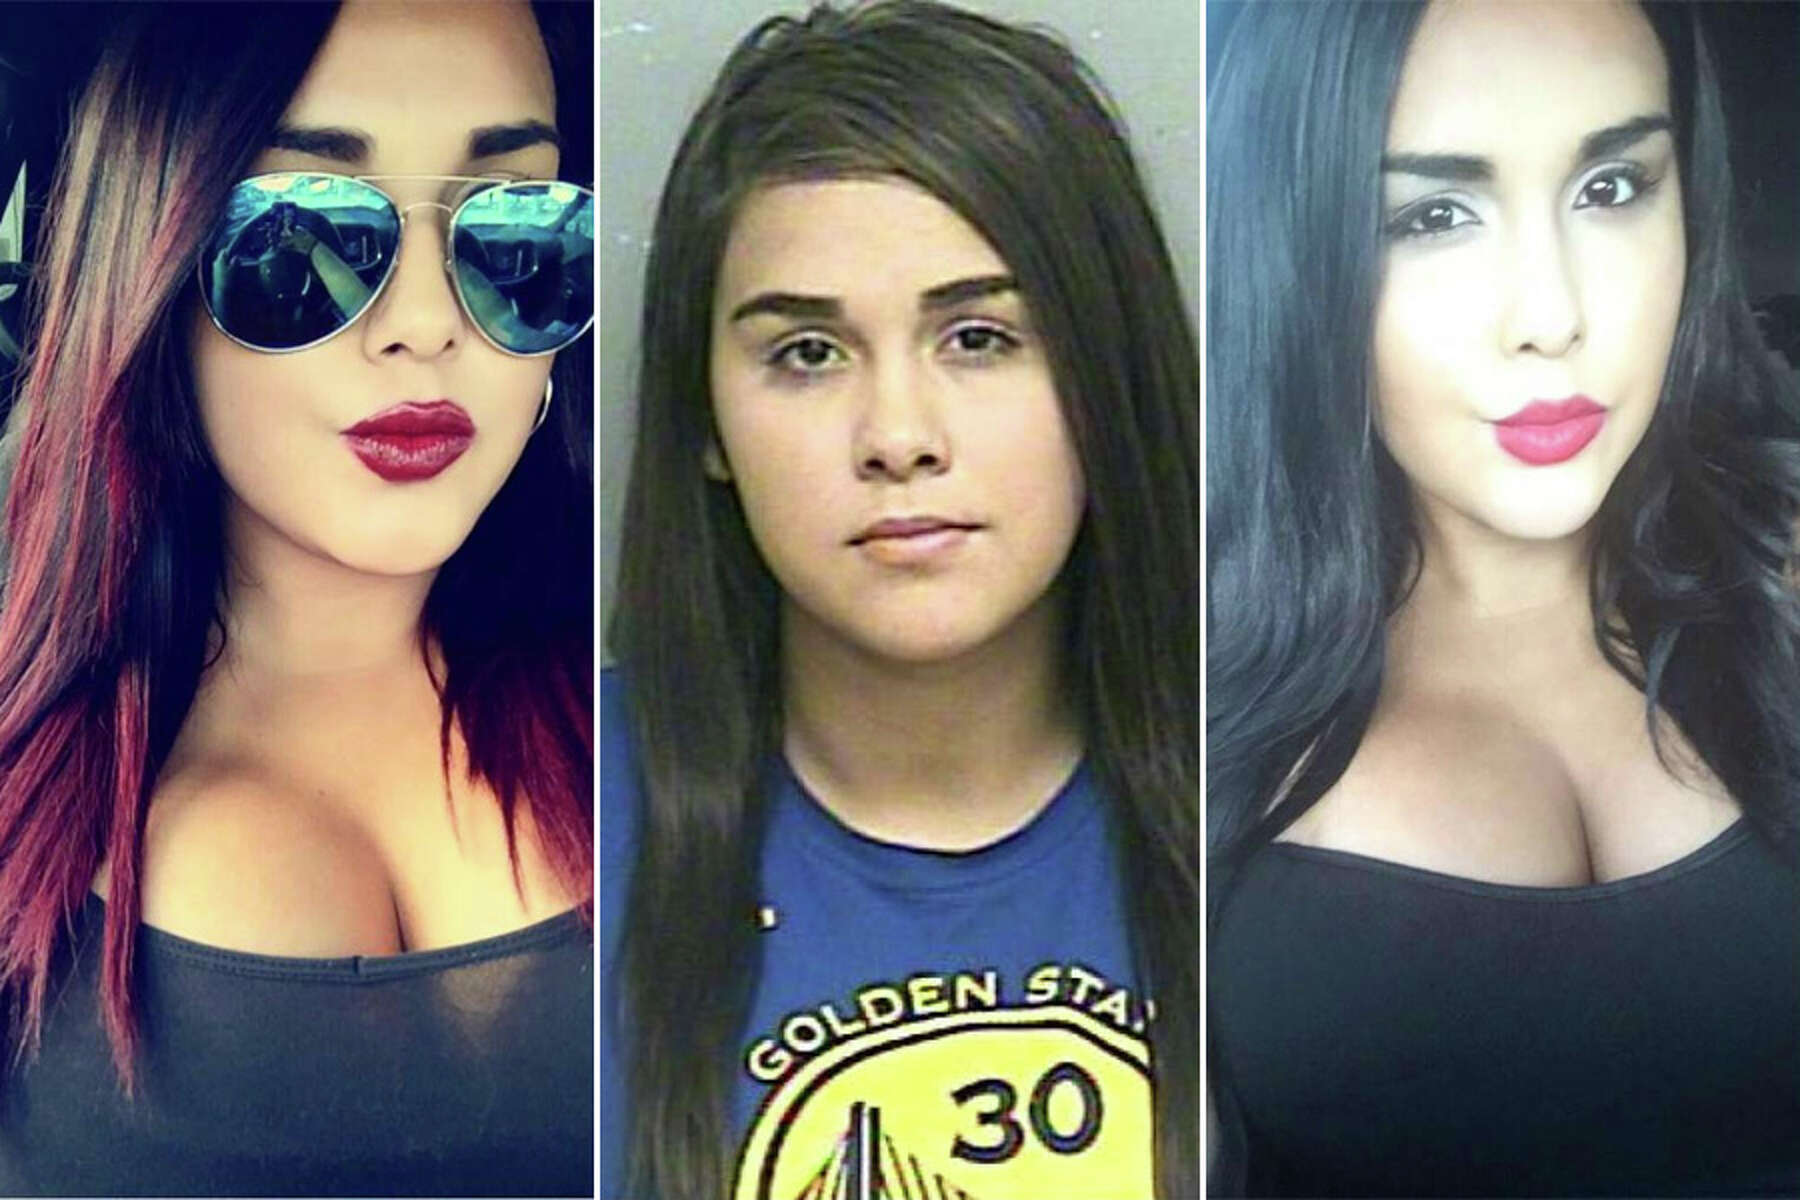 Tanya Ramirez Porn - Students, teachers and social media get a second look in light of recent  criminal incidents